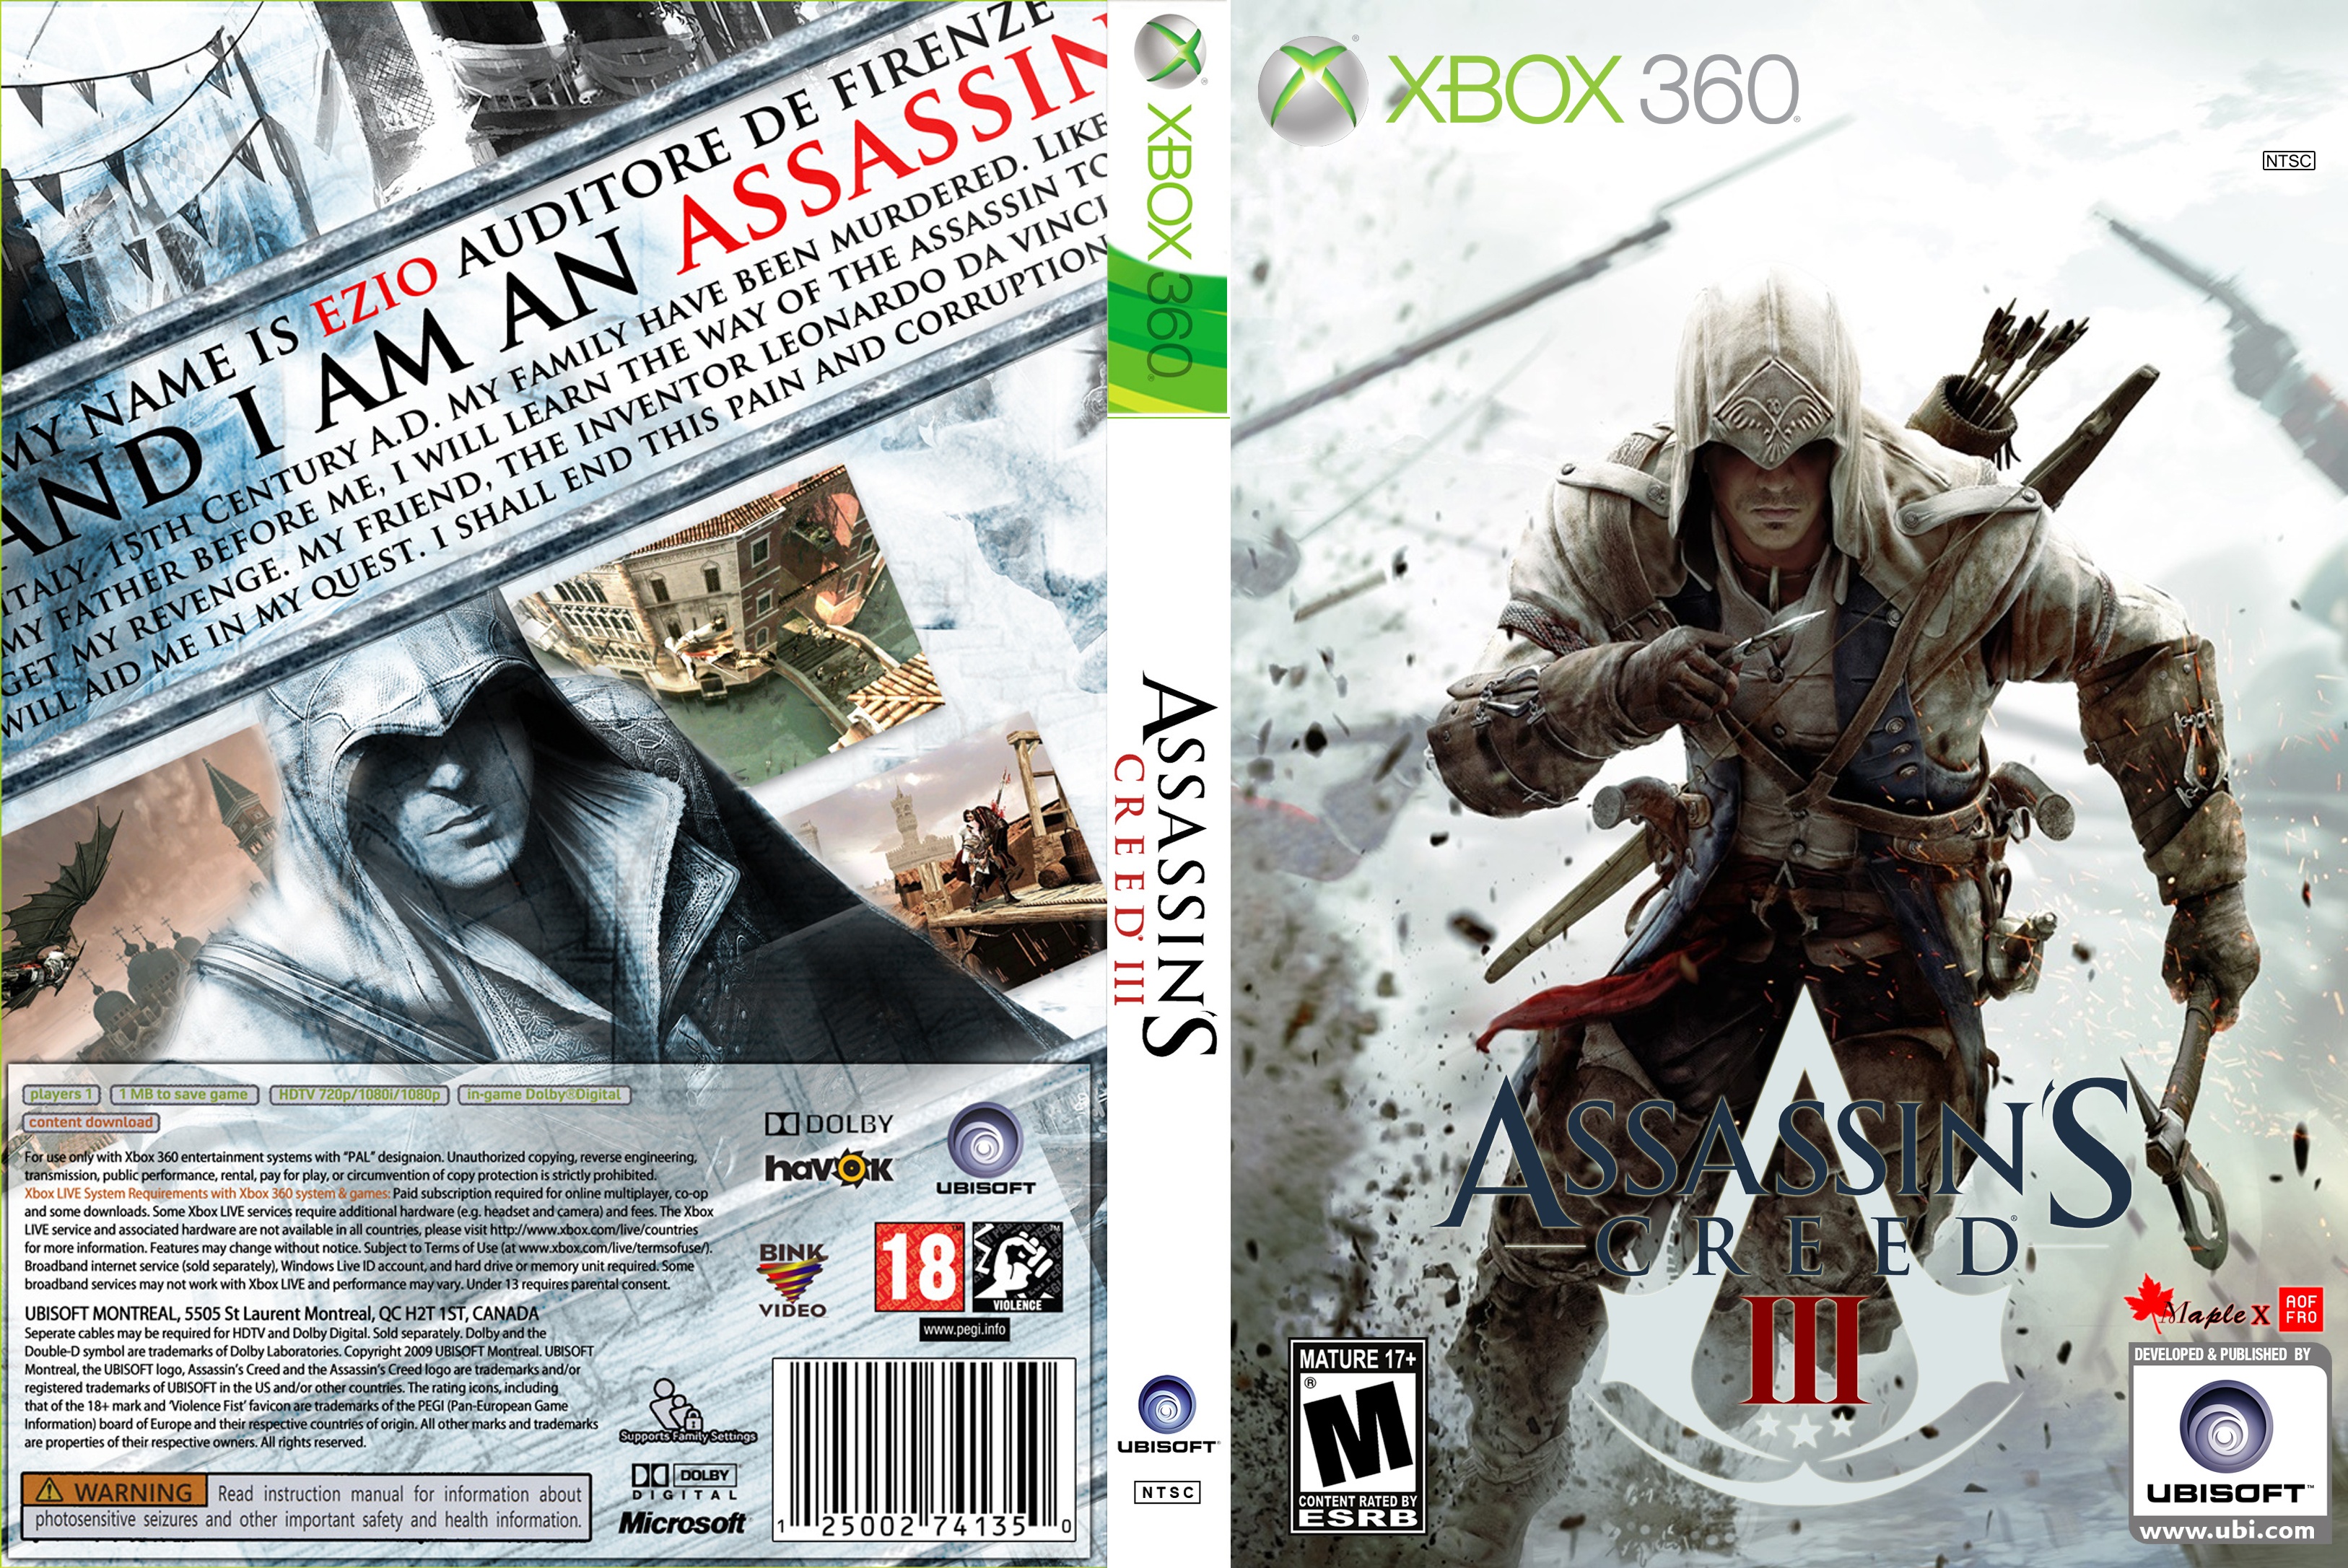 Assassins игра xbox. Ассасин Крид 3 на хбокс 360. Assassin's Creed® III Xbox 360 обложка. Assassins Creed 3 [Xbox 360]. Assassins Creed xbox360 CD.